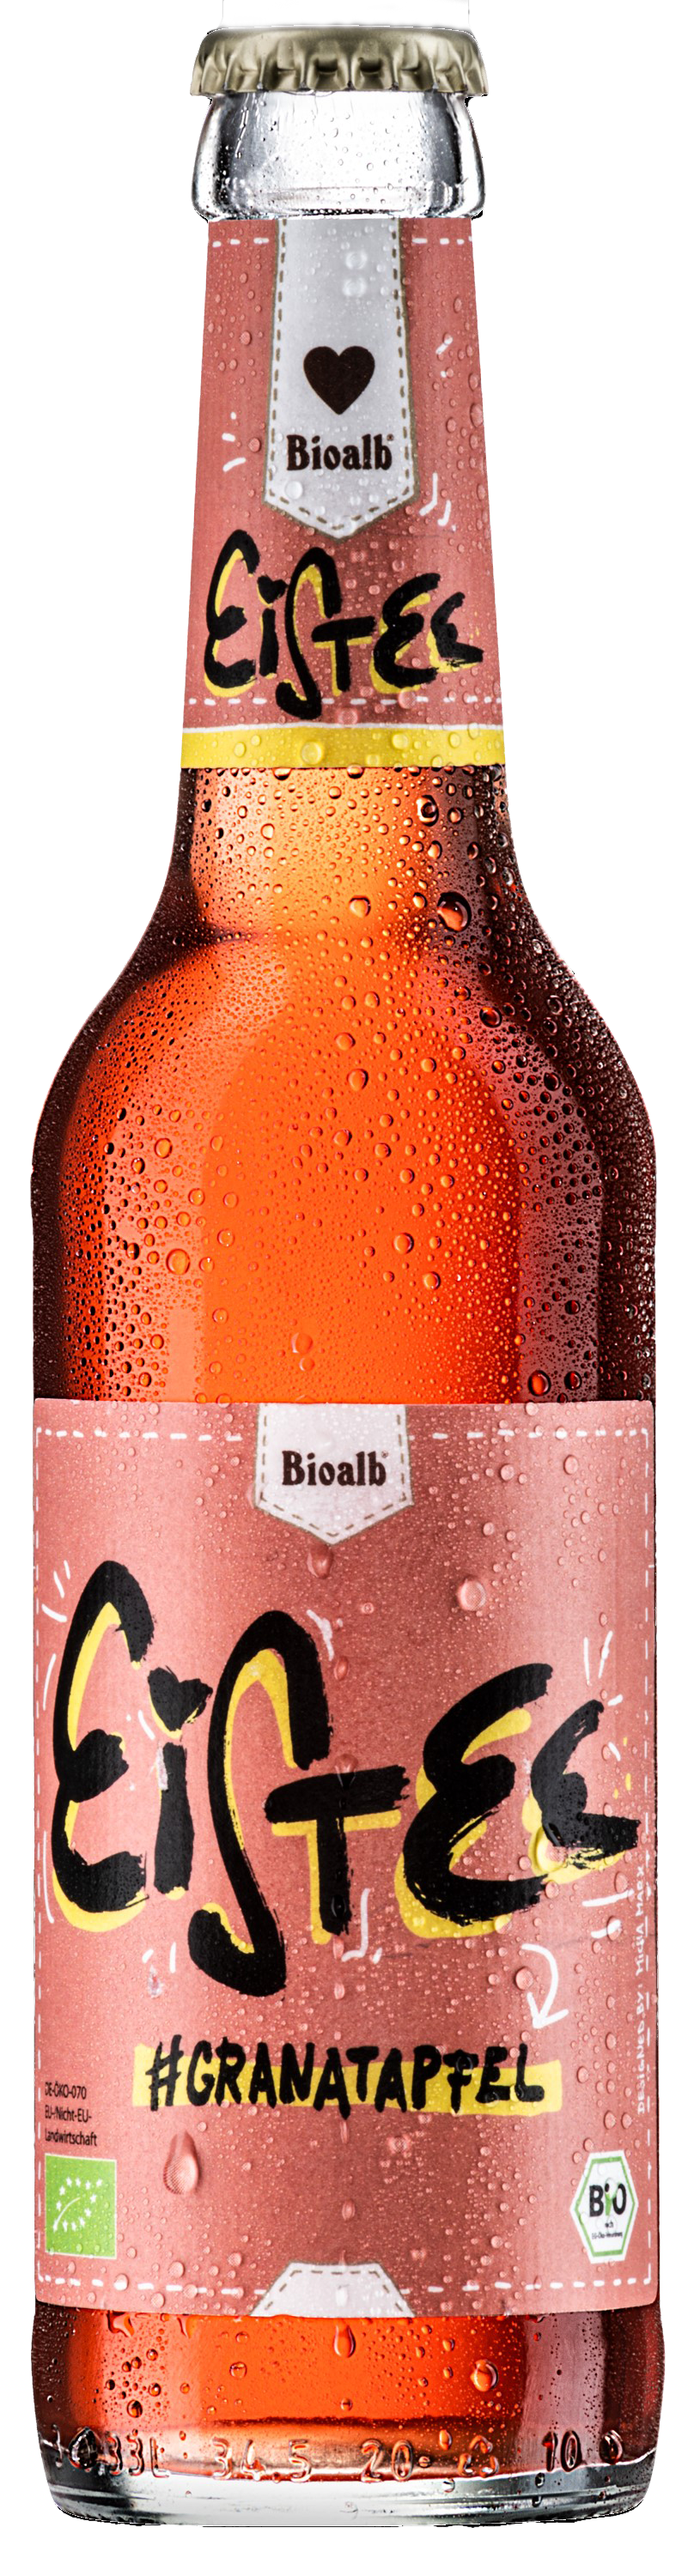 Bioalb Eistee Granatapfel, Bio-Eistee, Brauerei Zoller-Hof